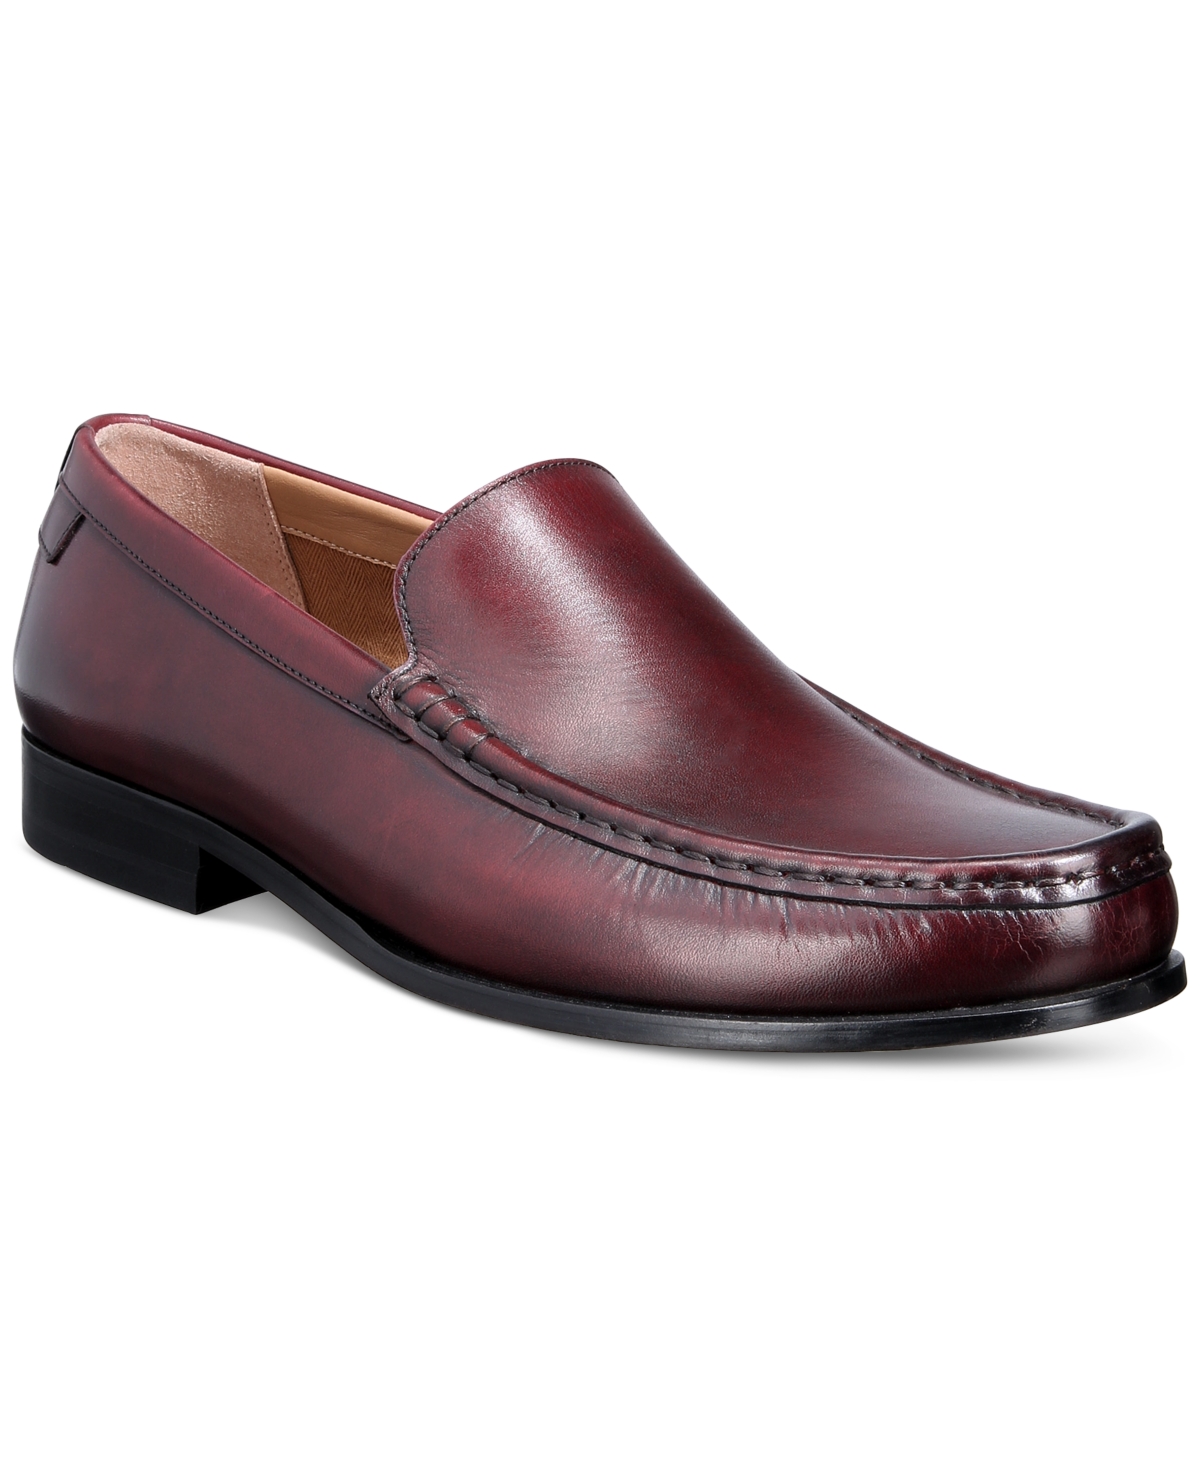 Men's Labi Leather Slip-On Loafers - Oxblood